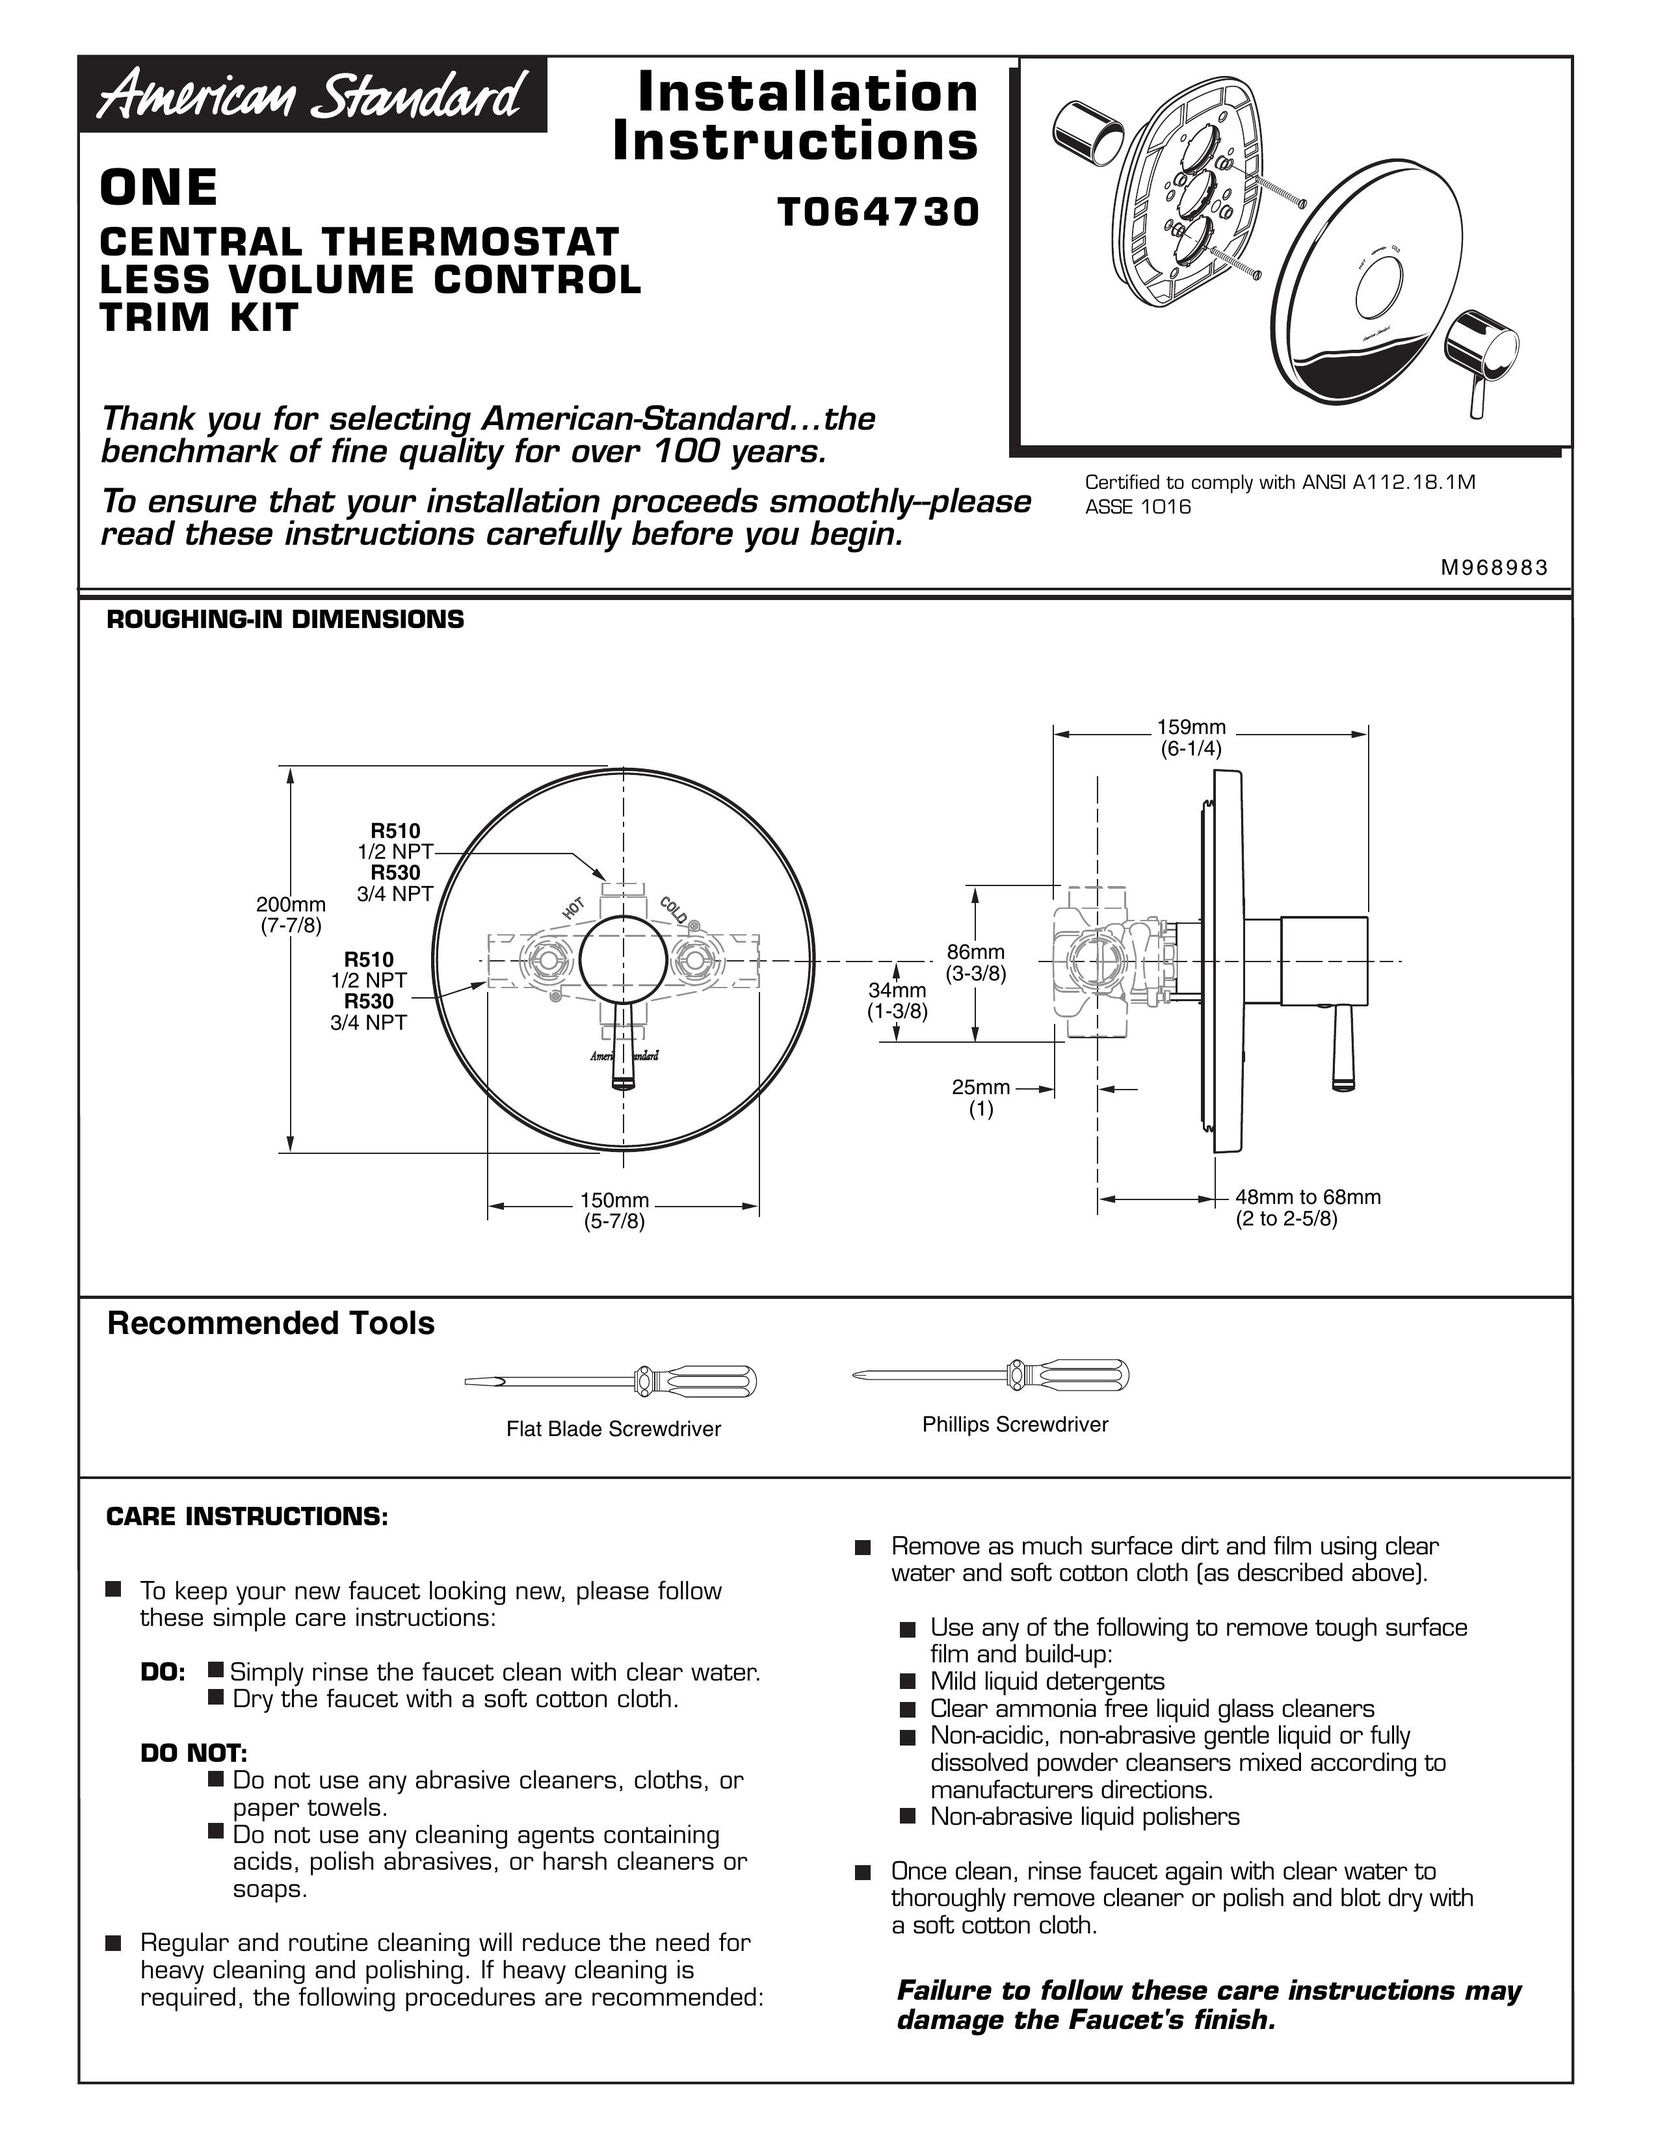 American Standard M968983 Thermostat User Manual